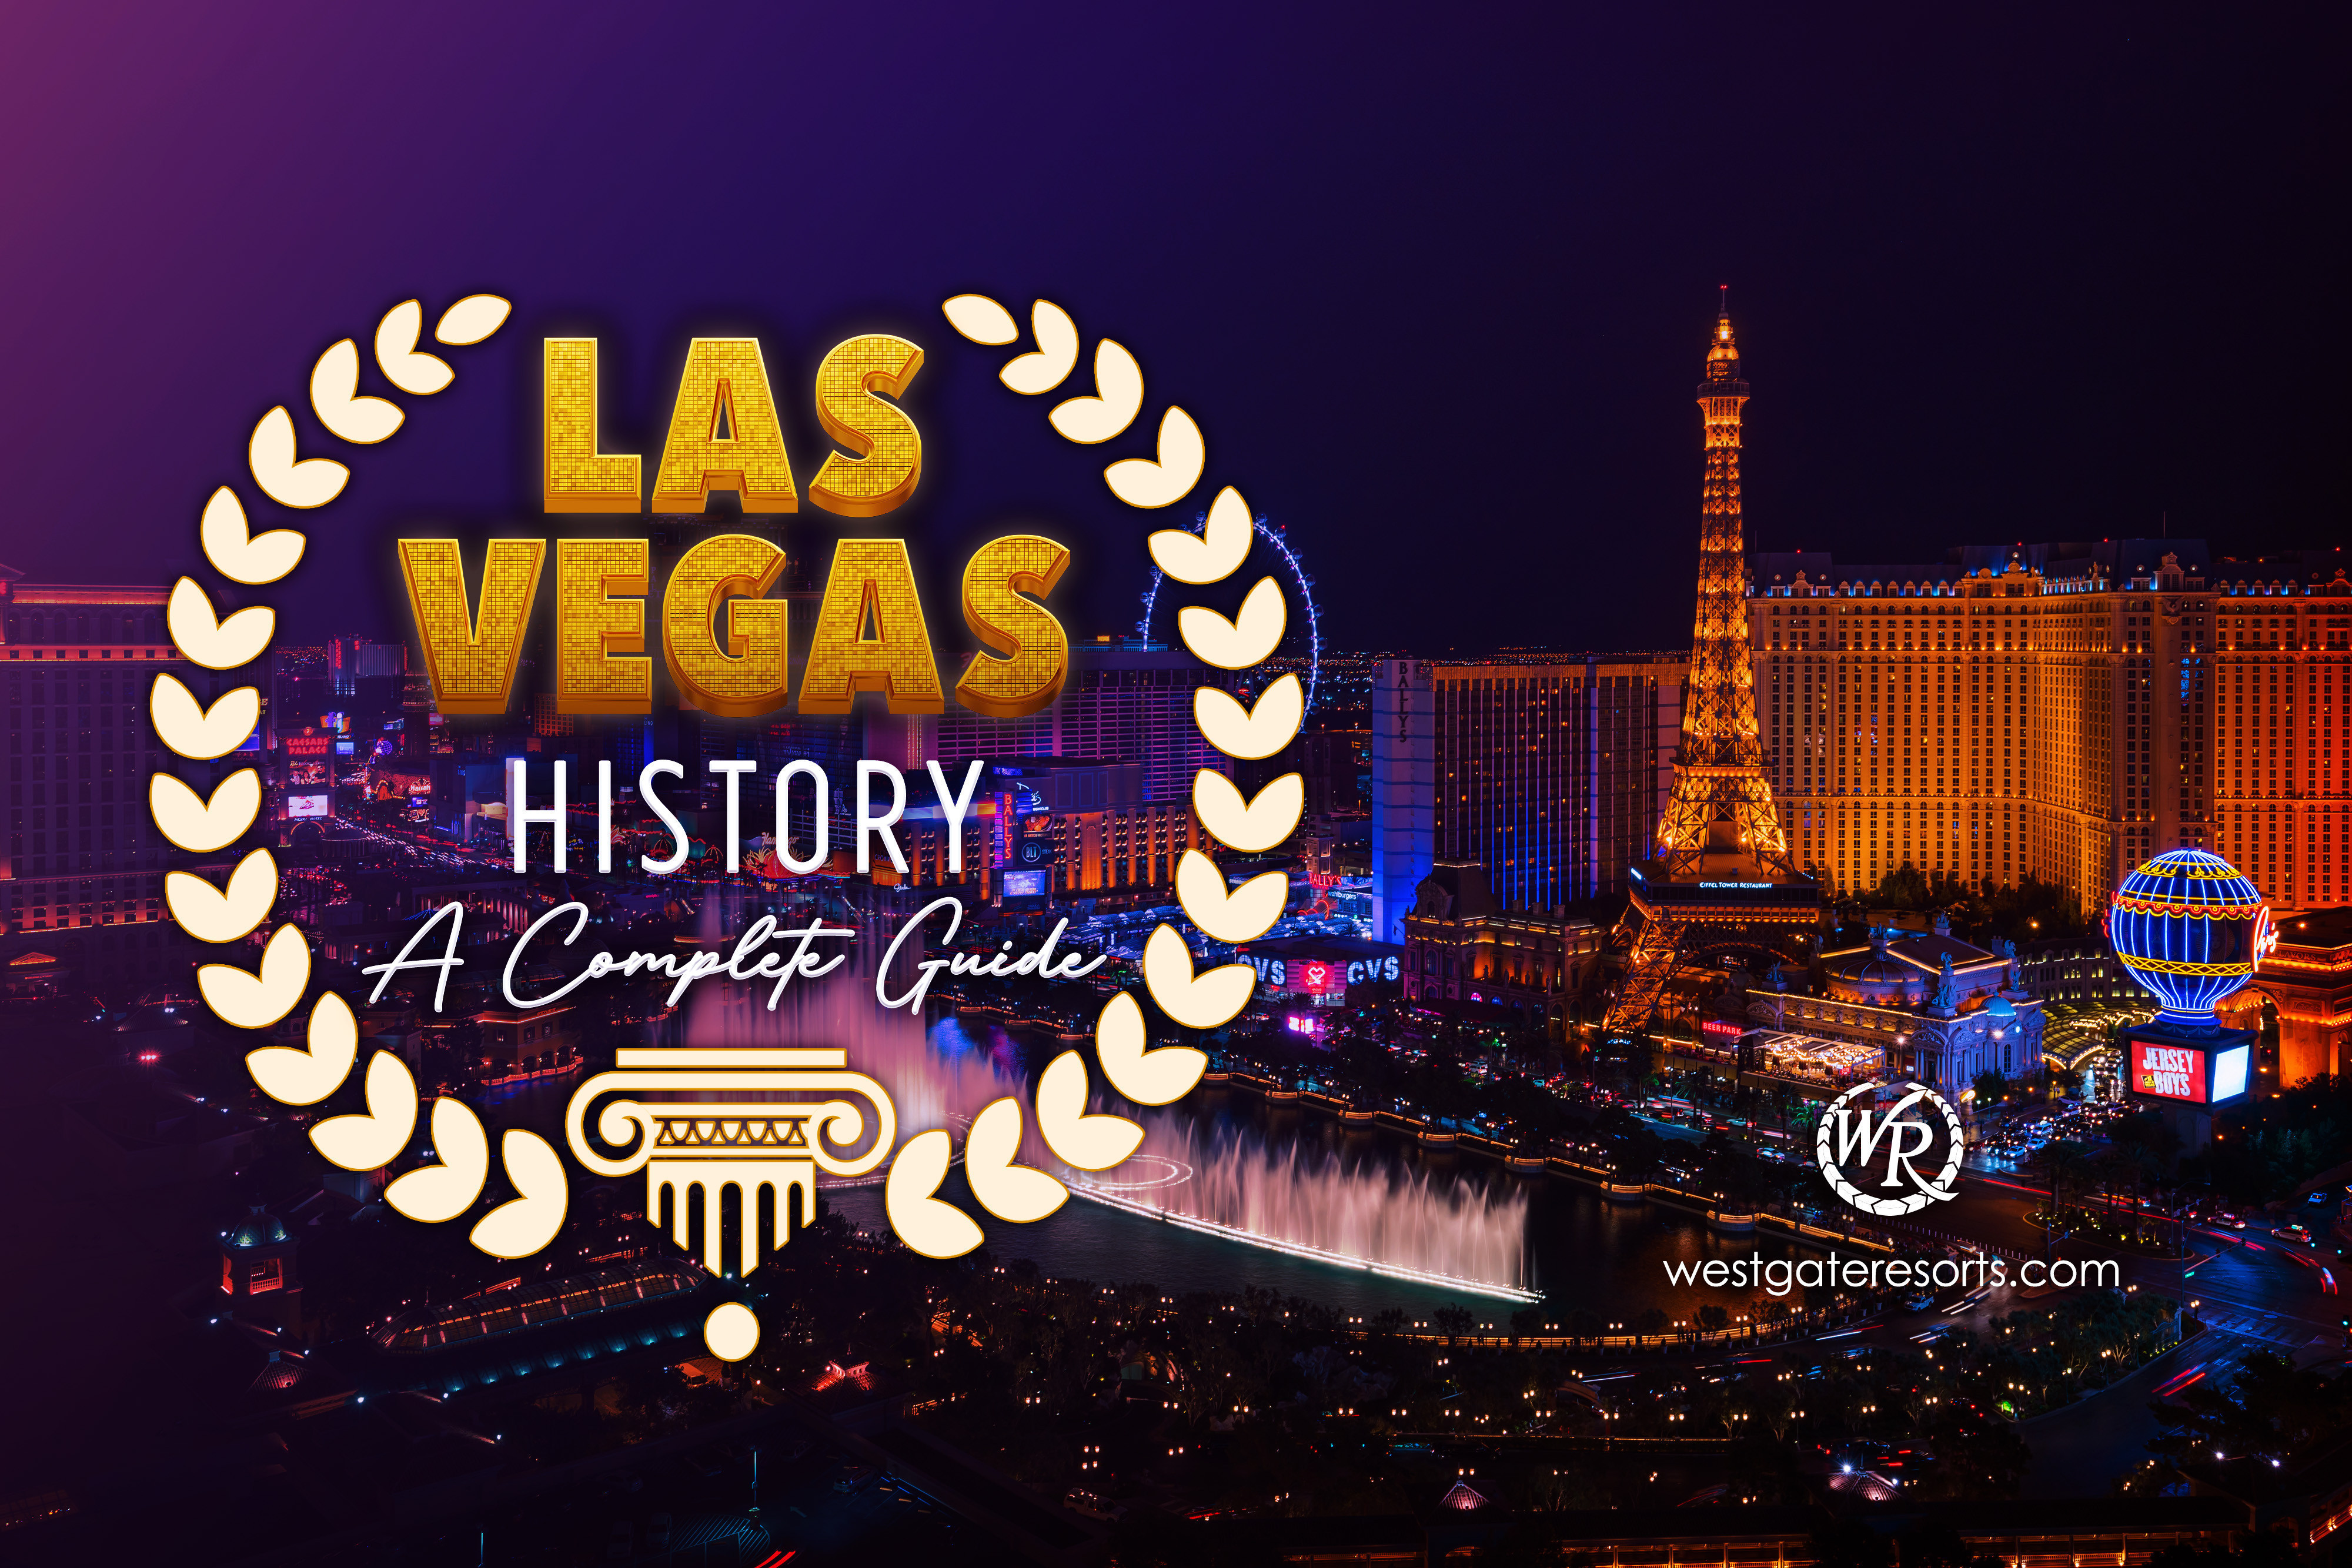 Historia de Las Vegas -Blog de viajes de Westgate